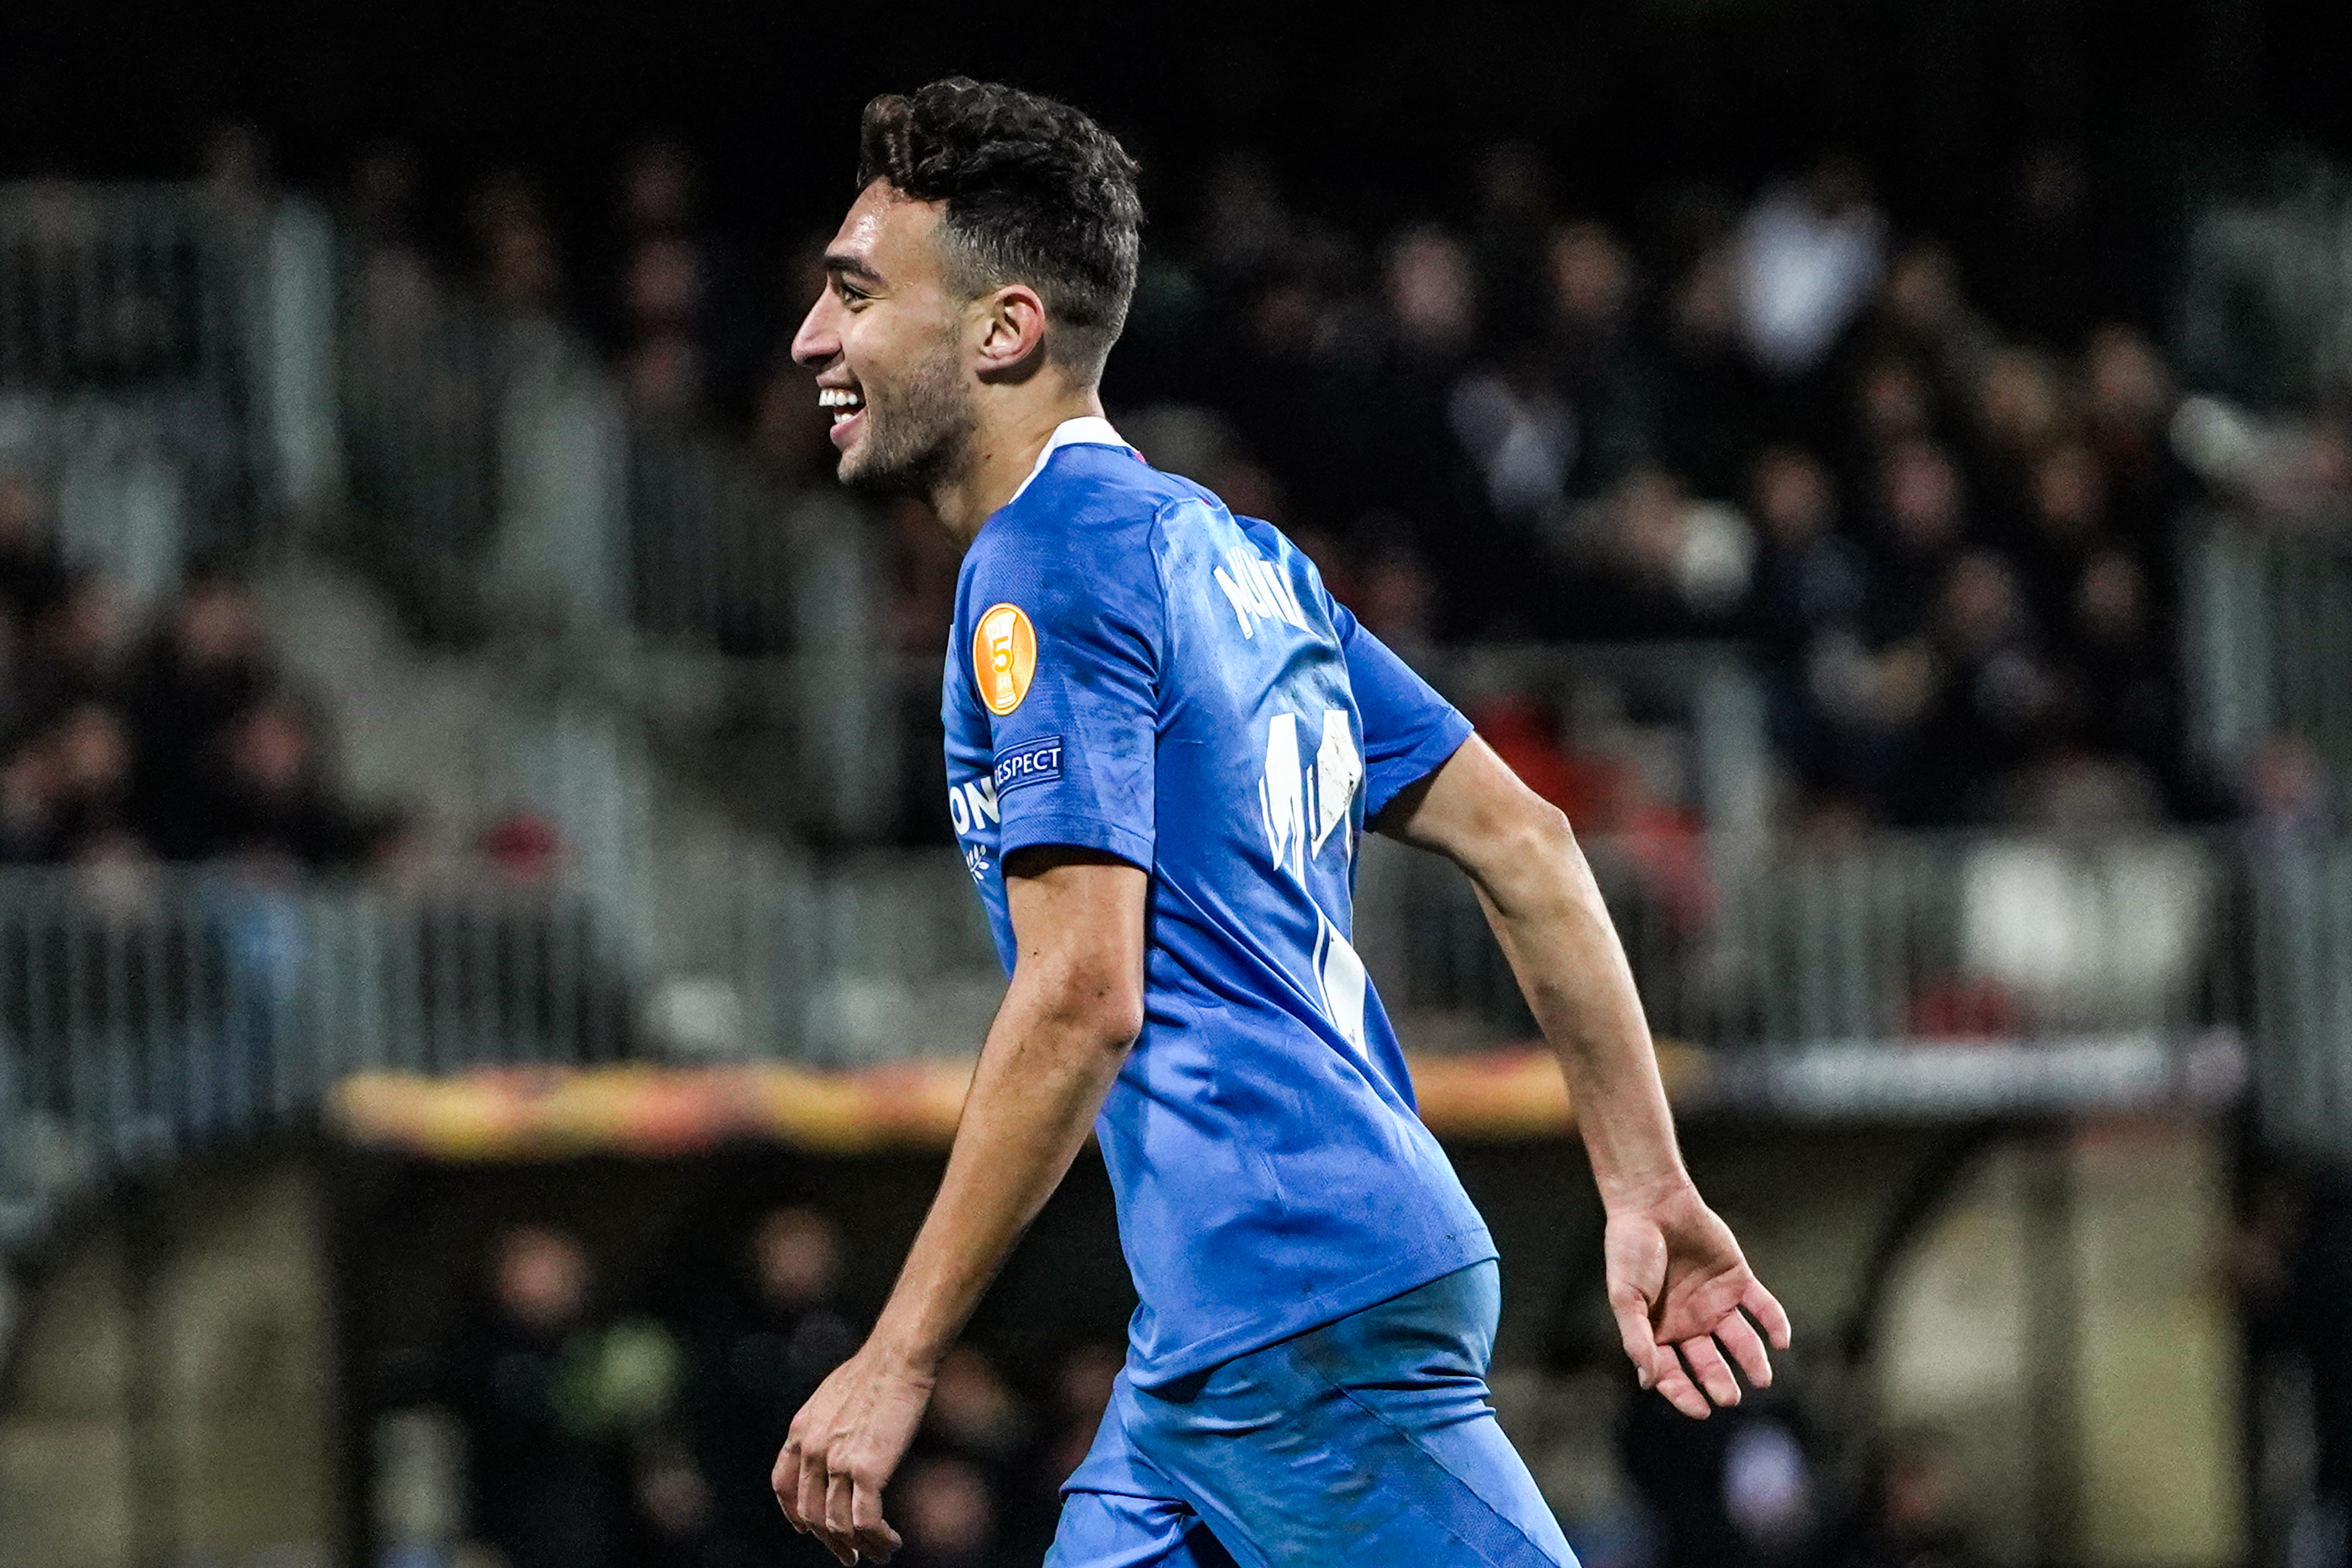 Munir celebra un gol en Luxemburgo frente al Dudelange